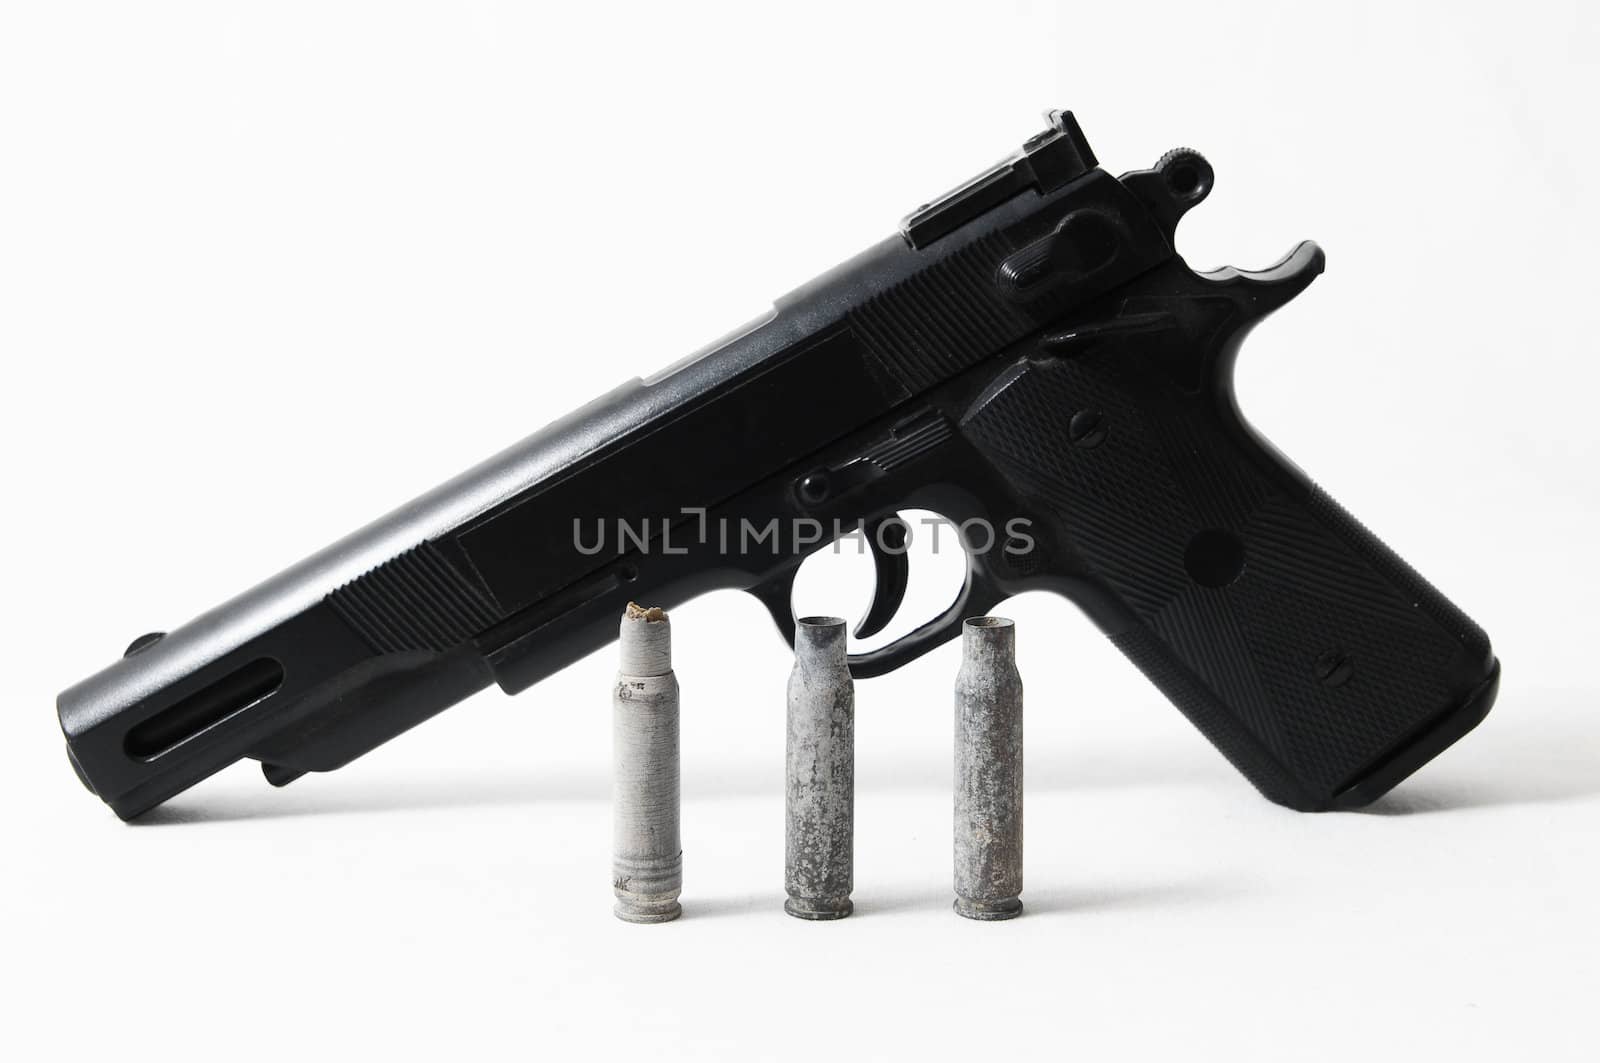 Pistol Gun and Bullets by underworld